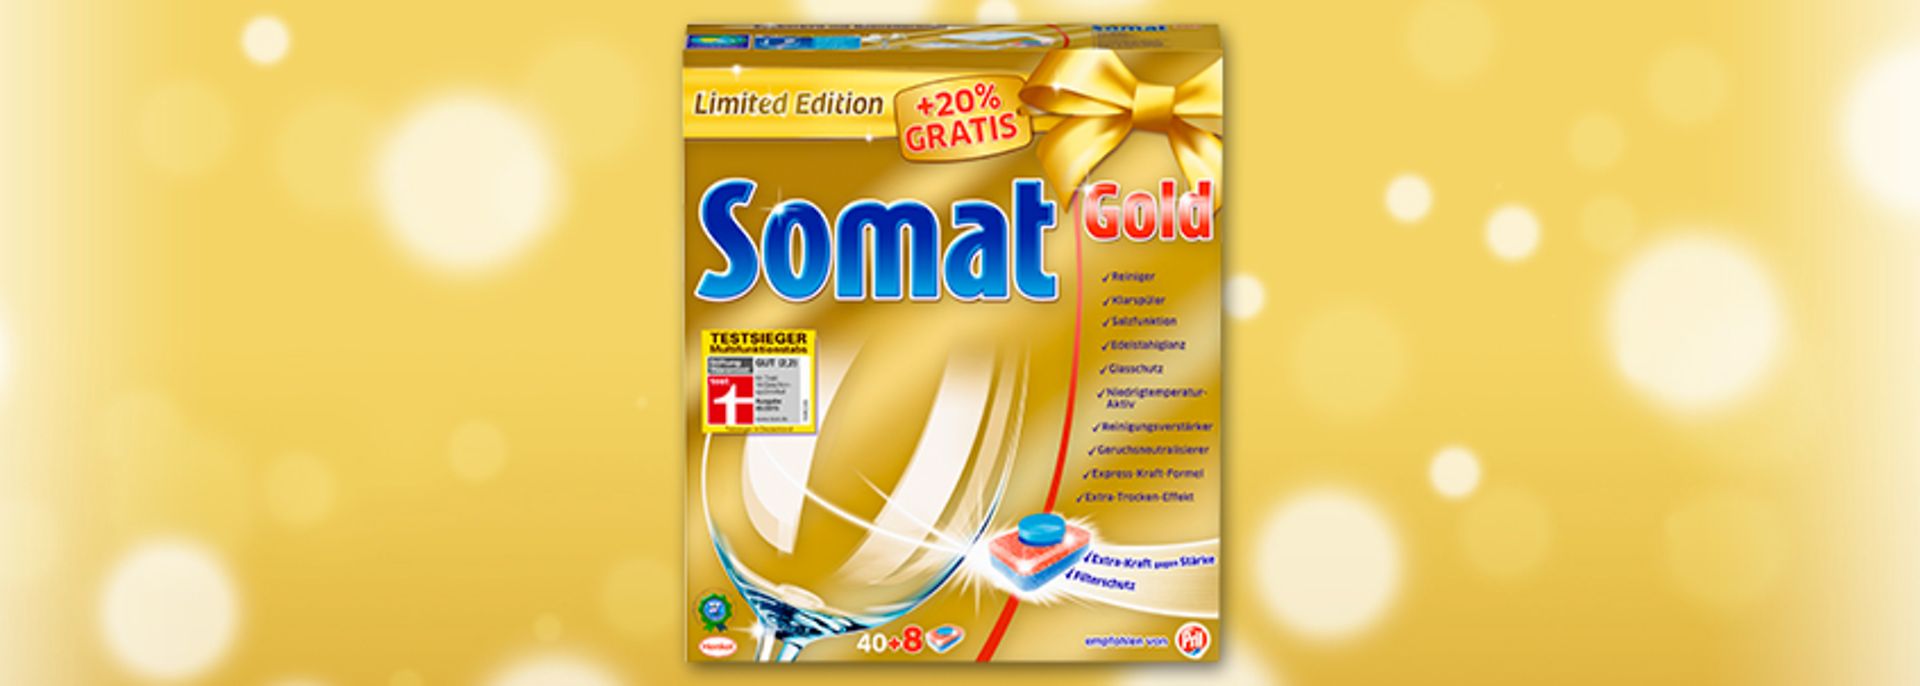 Somat Gold Sonderedition